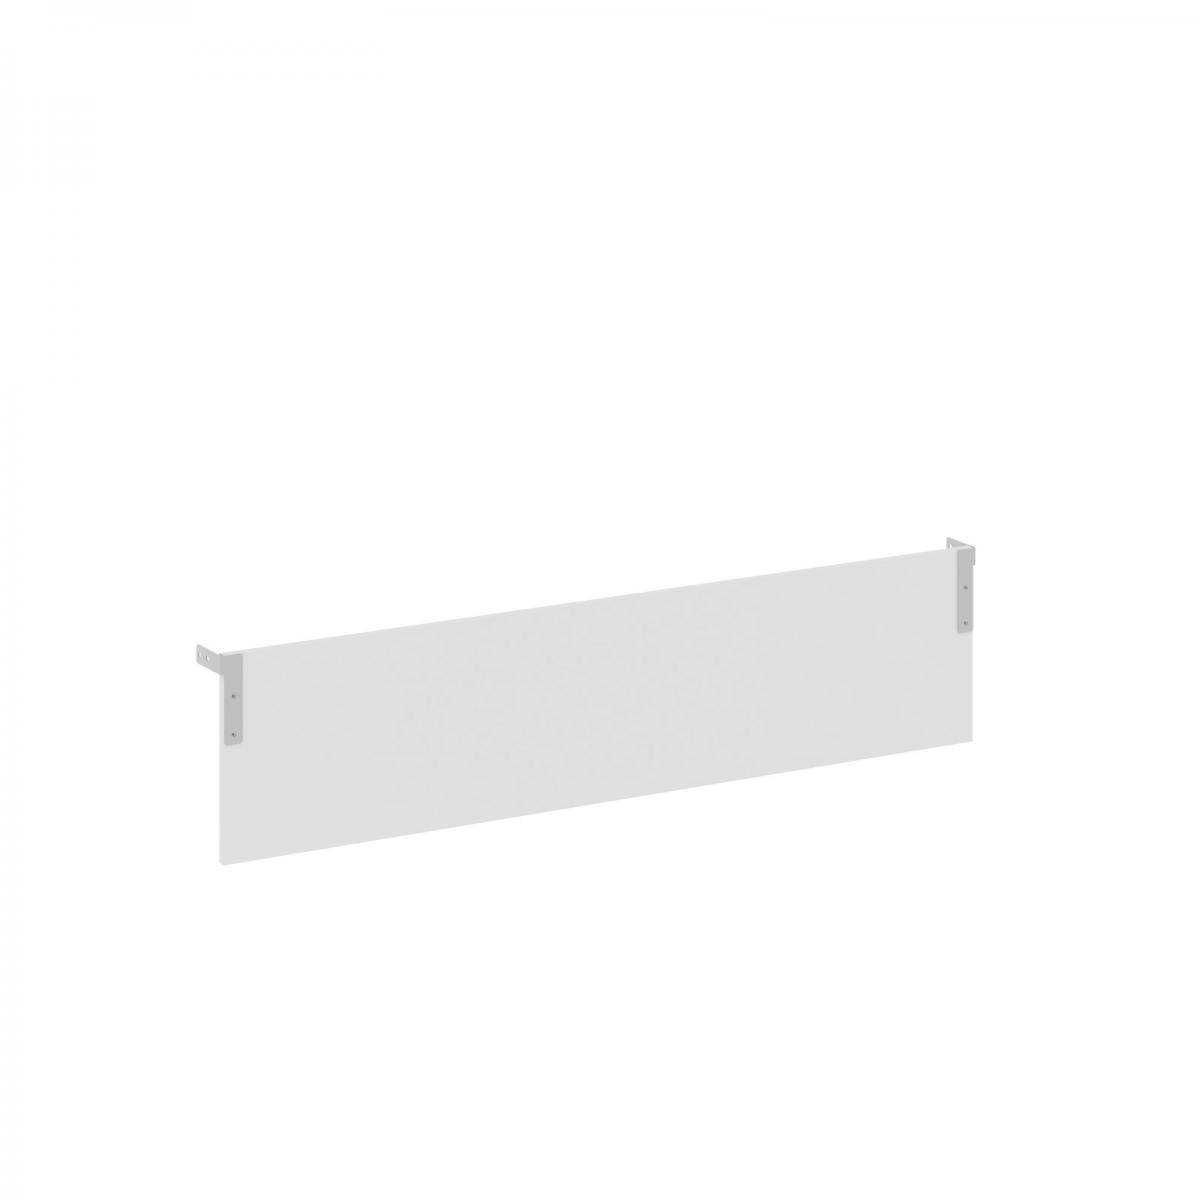 Фронтальная панель подвесная XDST 167 Белый/Алюминий 1500х350х18 XTEN-S